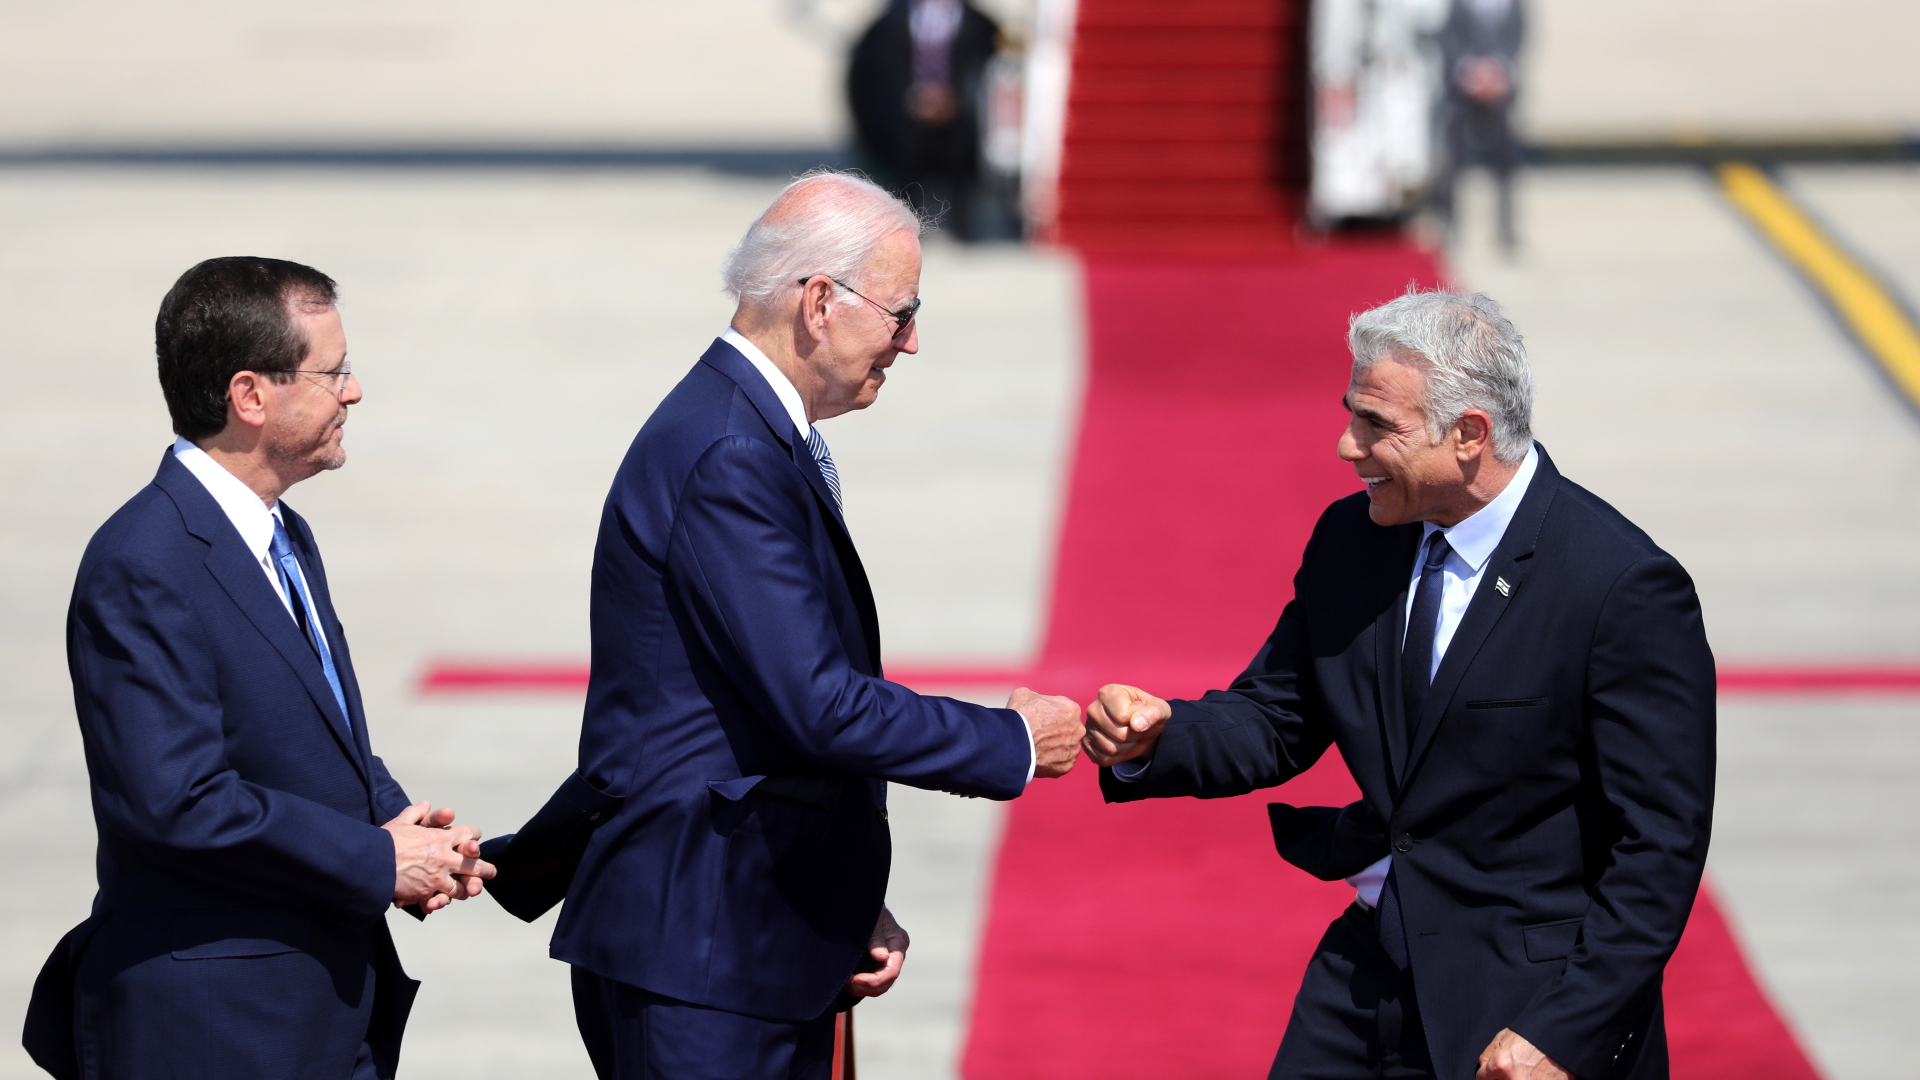 Joe Biden begrüßt in Israel Jair Lapid per Faust, links daneben steht Izchak Herzog.  | EPA